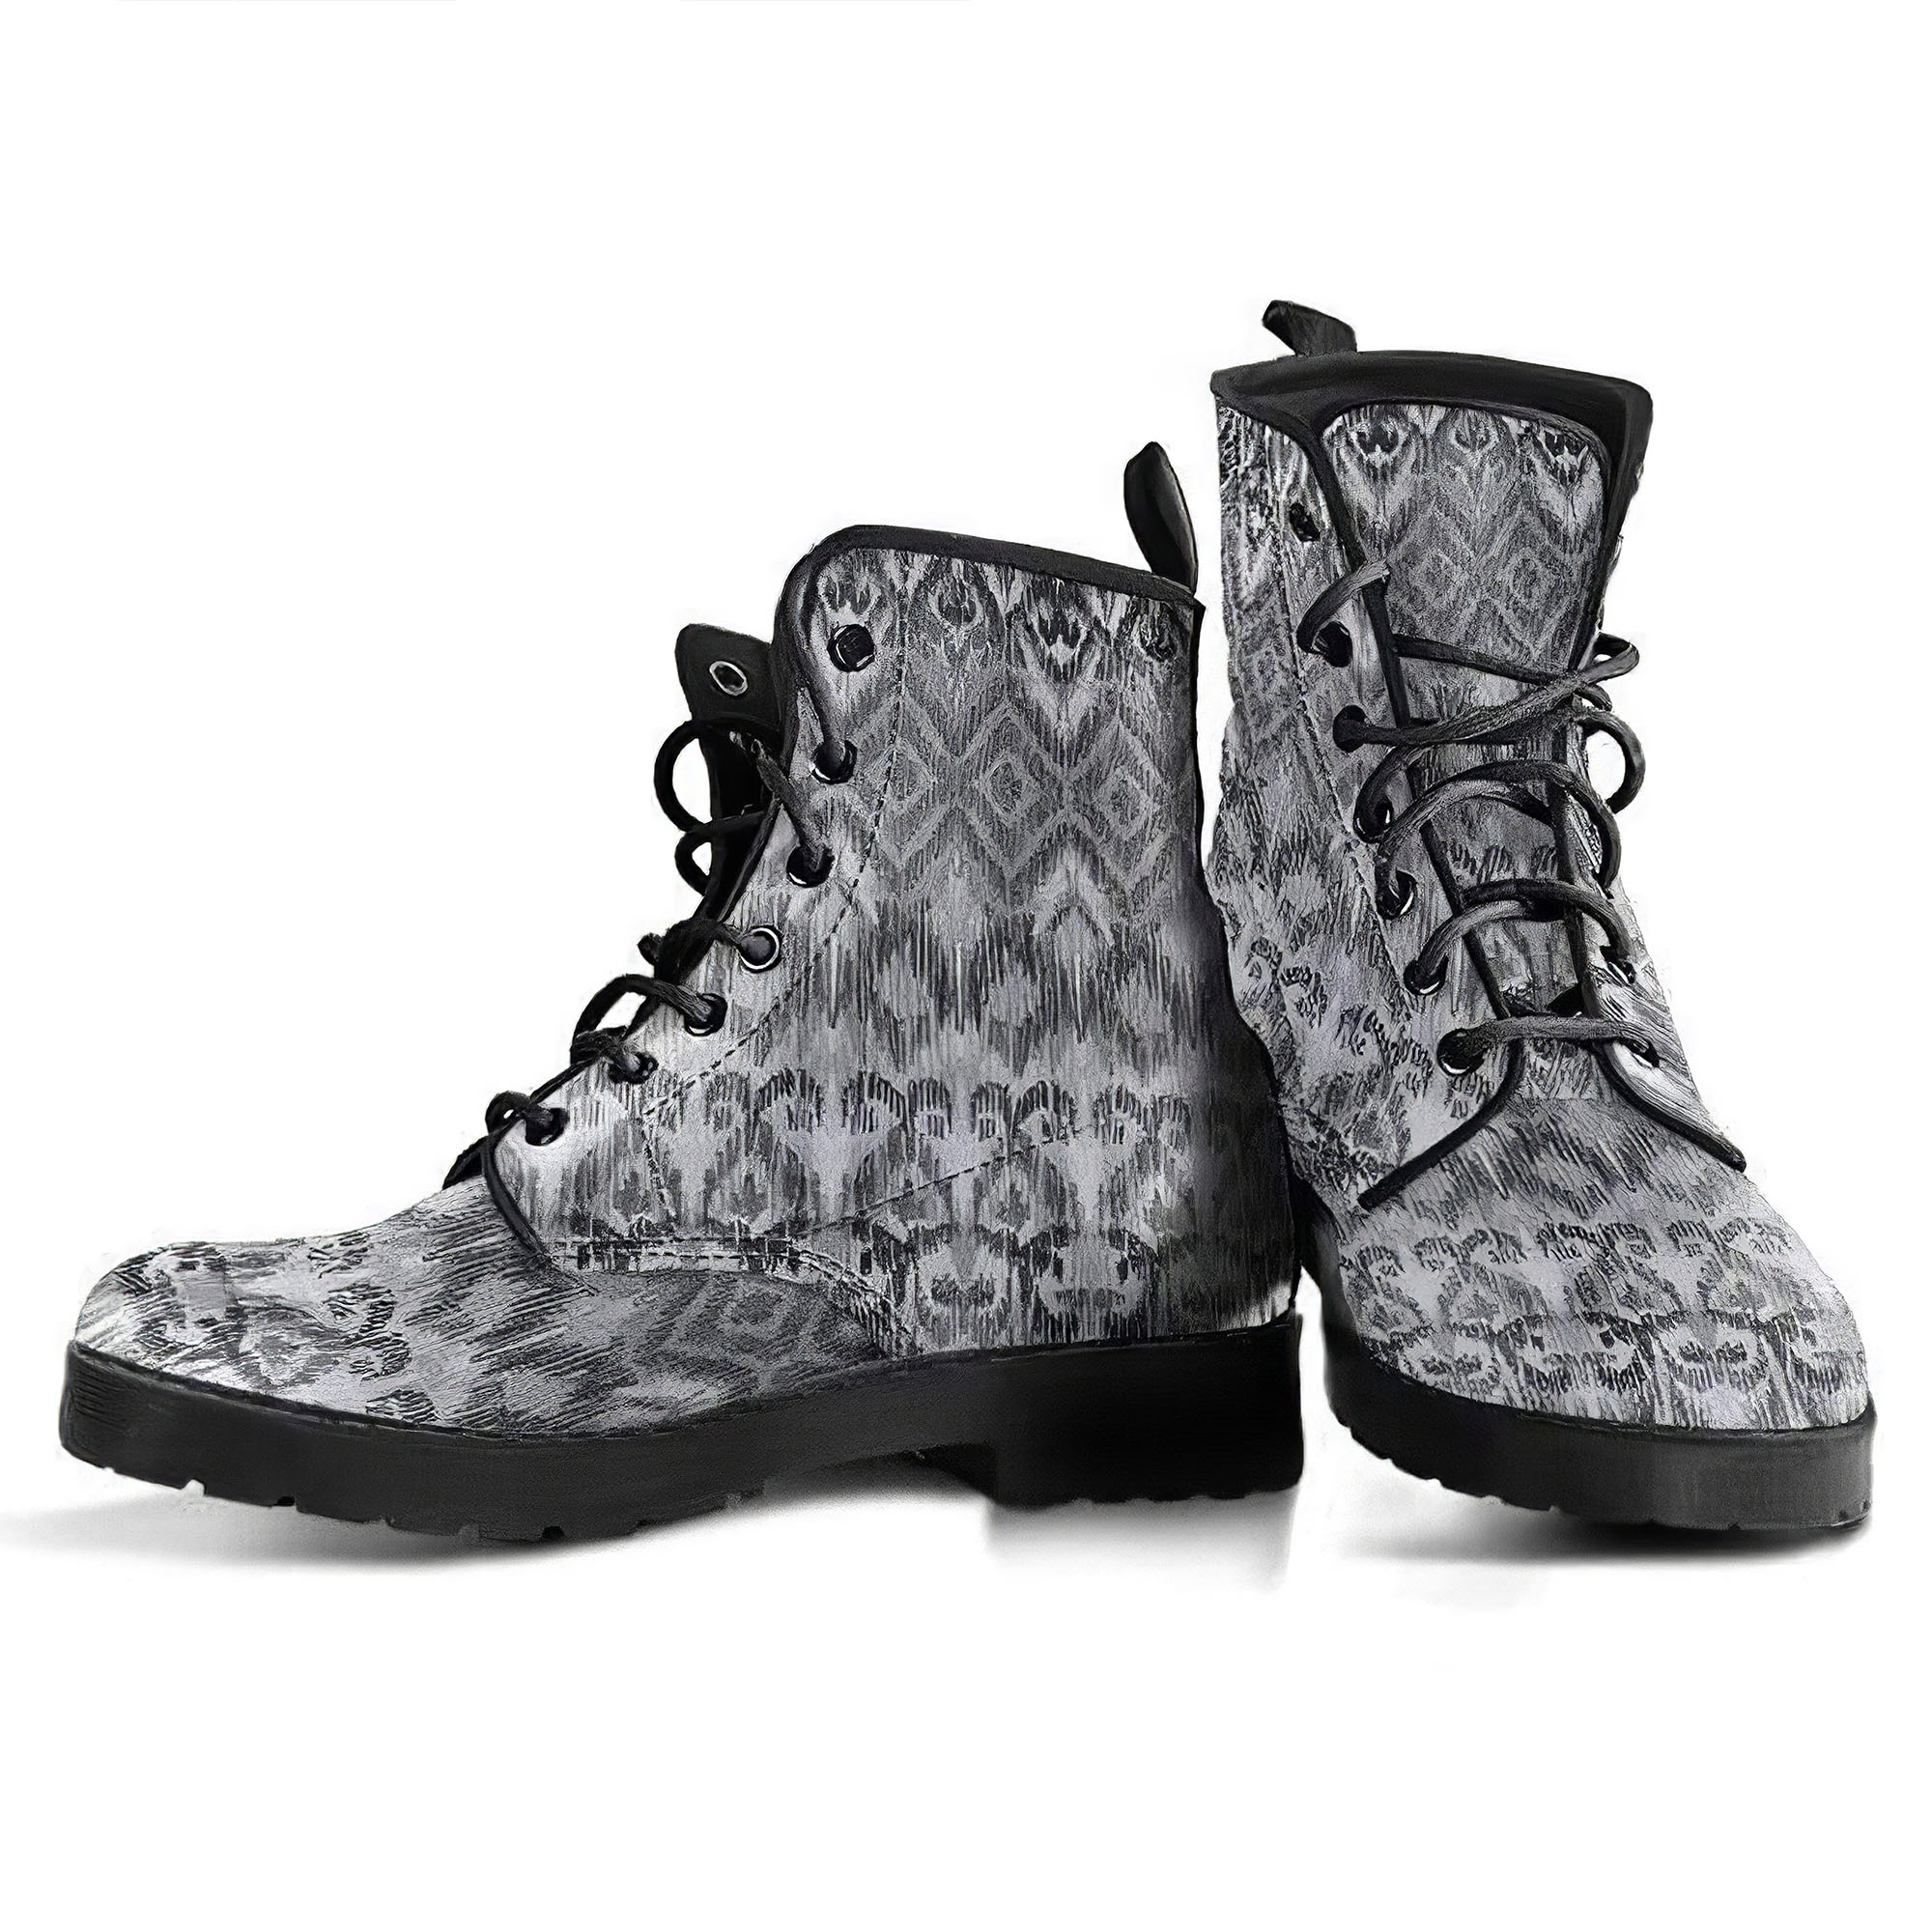 boho-pattern-handcrafted-boots-5-gp-main.jpg